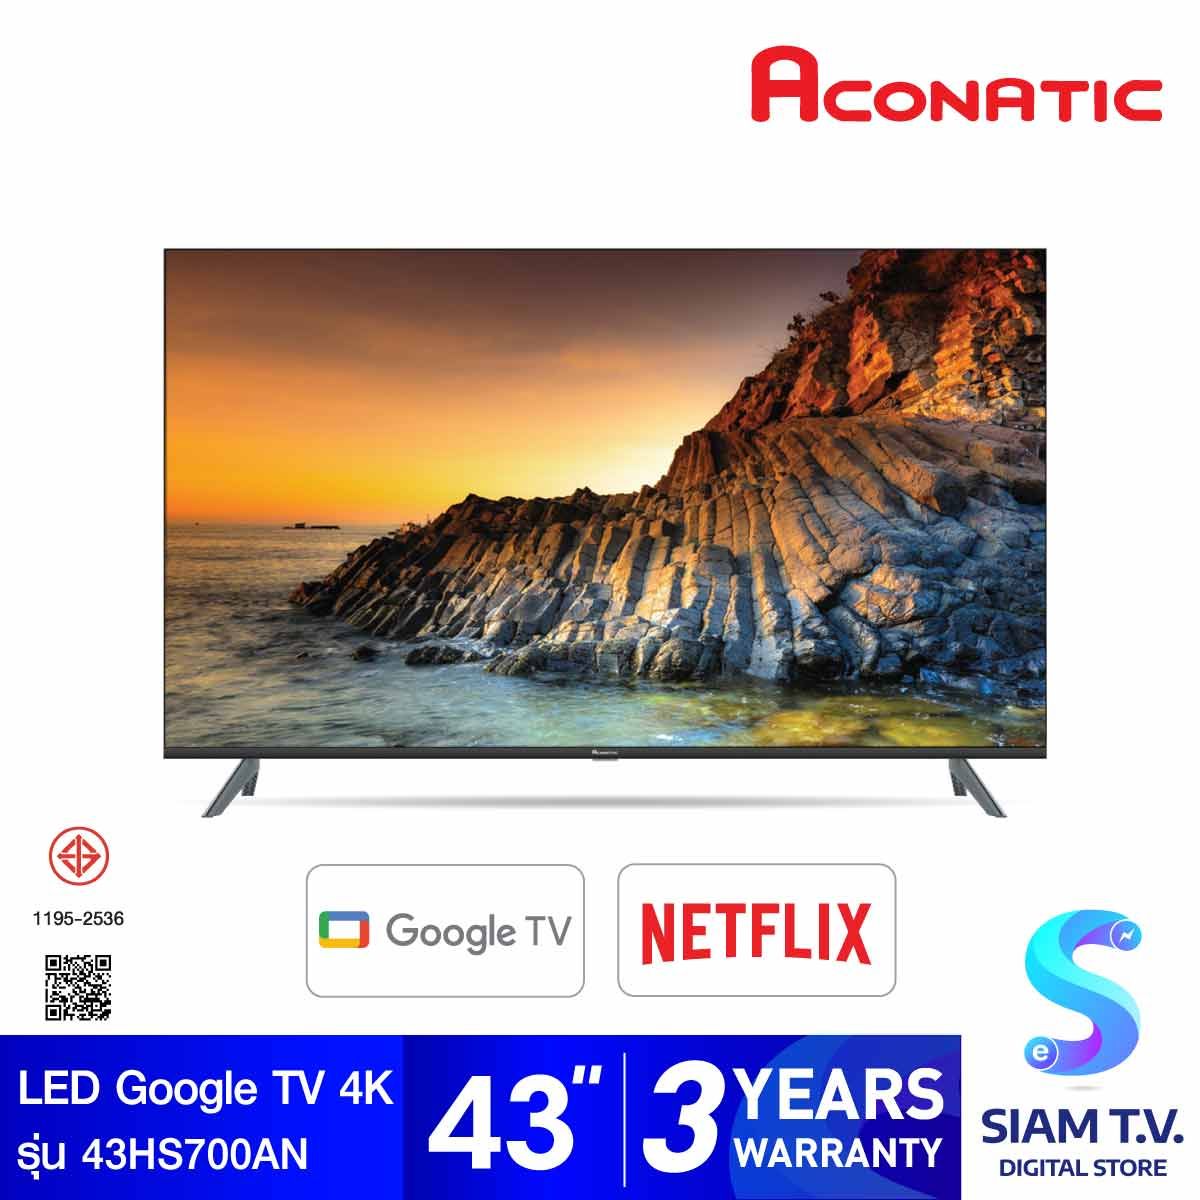 ACONATIC  LED Google TV  รุ่น 43HS700AN สมาร์ททีวี 43 นิ้ว  Frameless Design